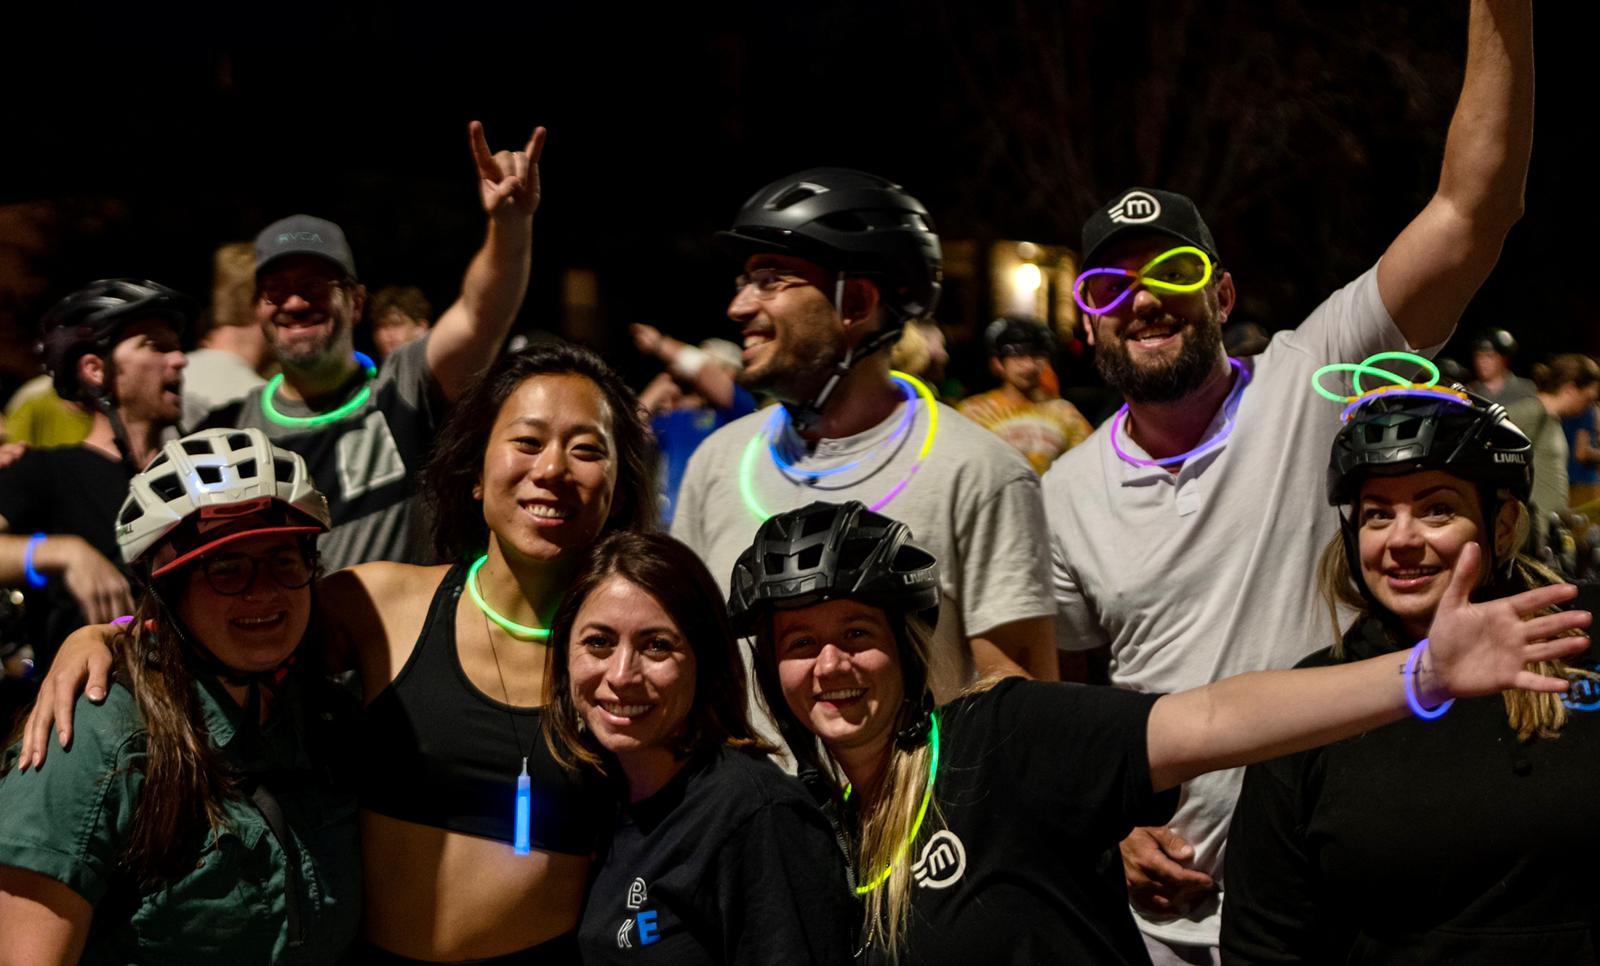 group of e-bike riders celebrating at night